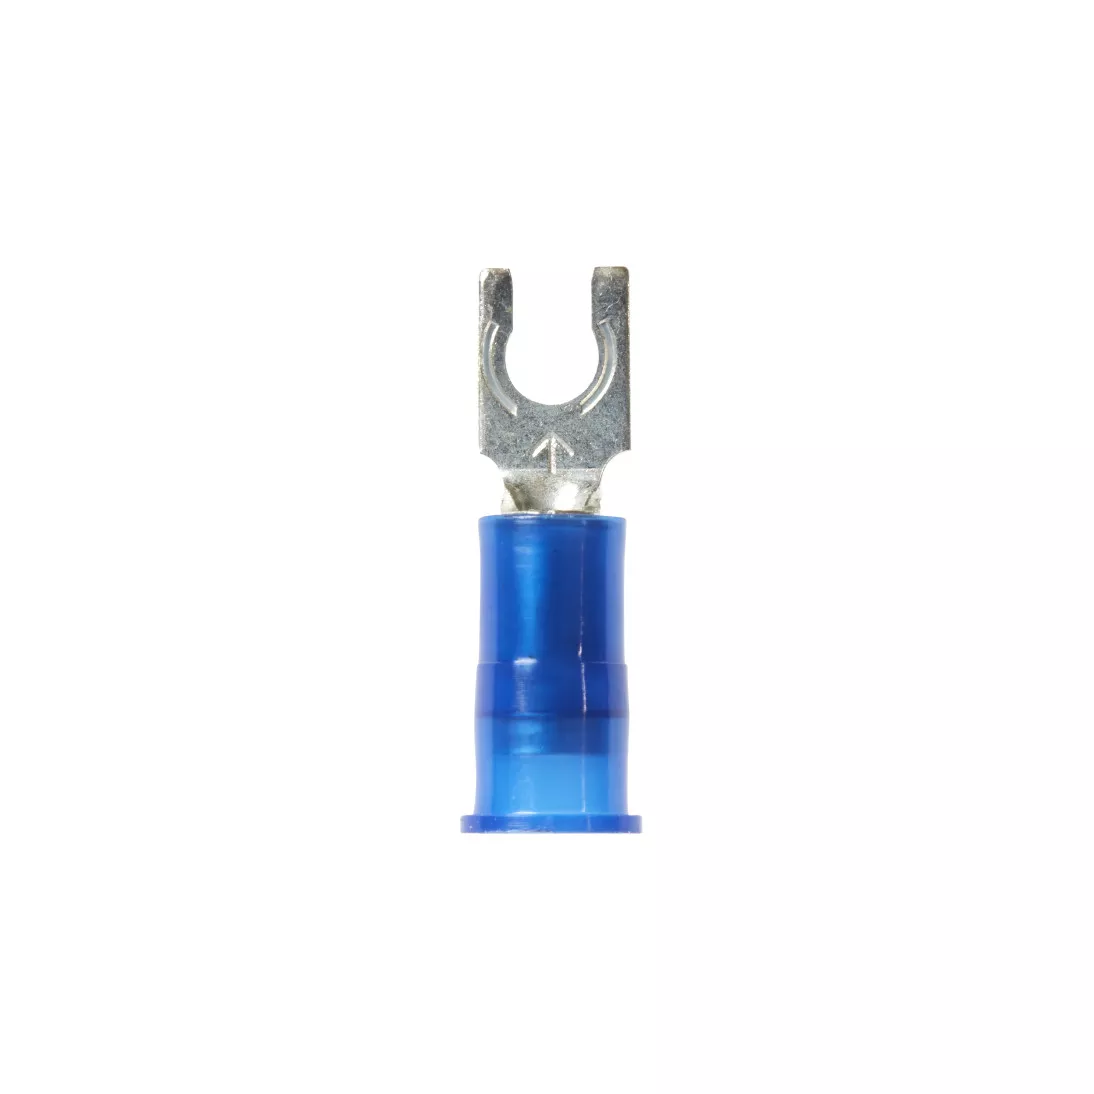 3M™ Scotchlok™ Locking Fork, Nylon Insulated w/Insulation Grip
MNG14-6FLK, Stud Size 6, 1000/Case